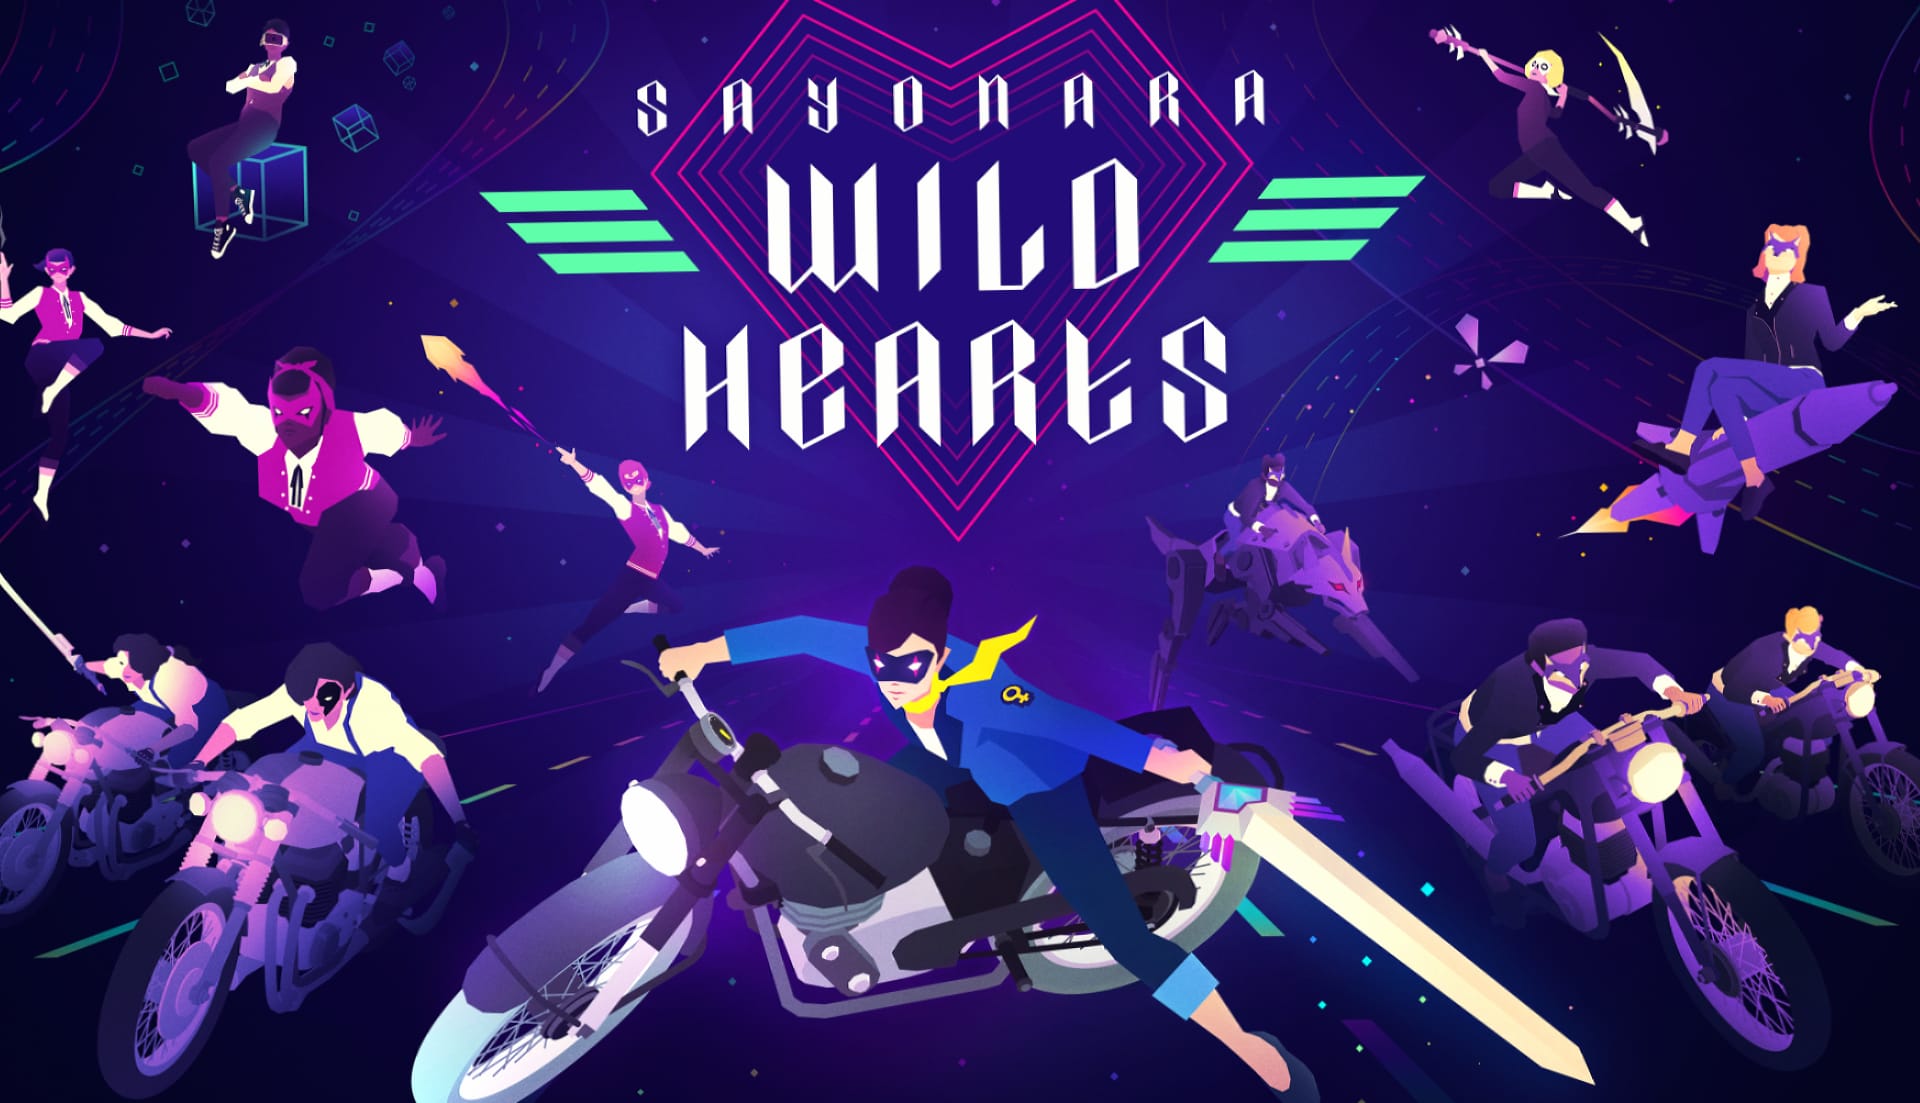 Sayonara Wild Hearts at 320 x 480 iPhone size wallpapers HD quality